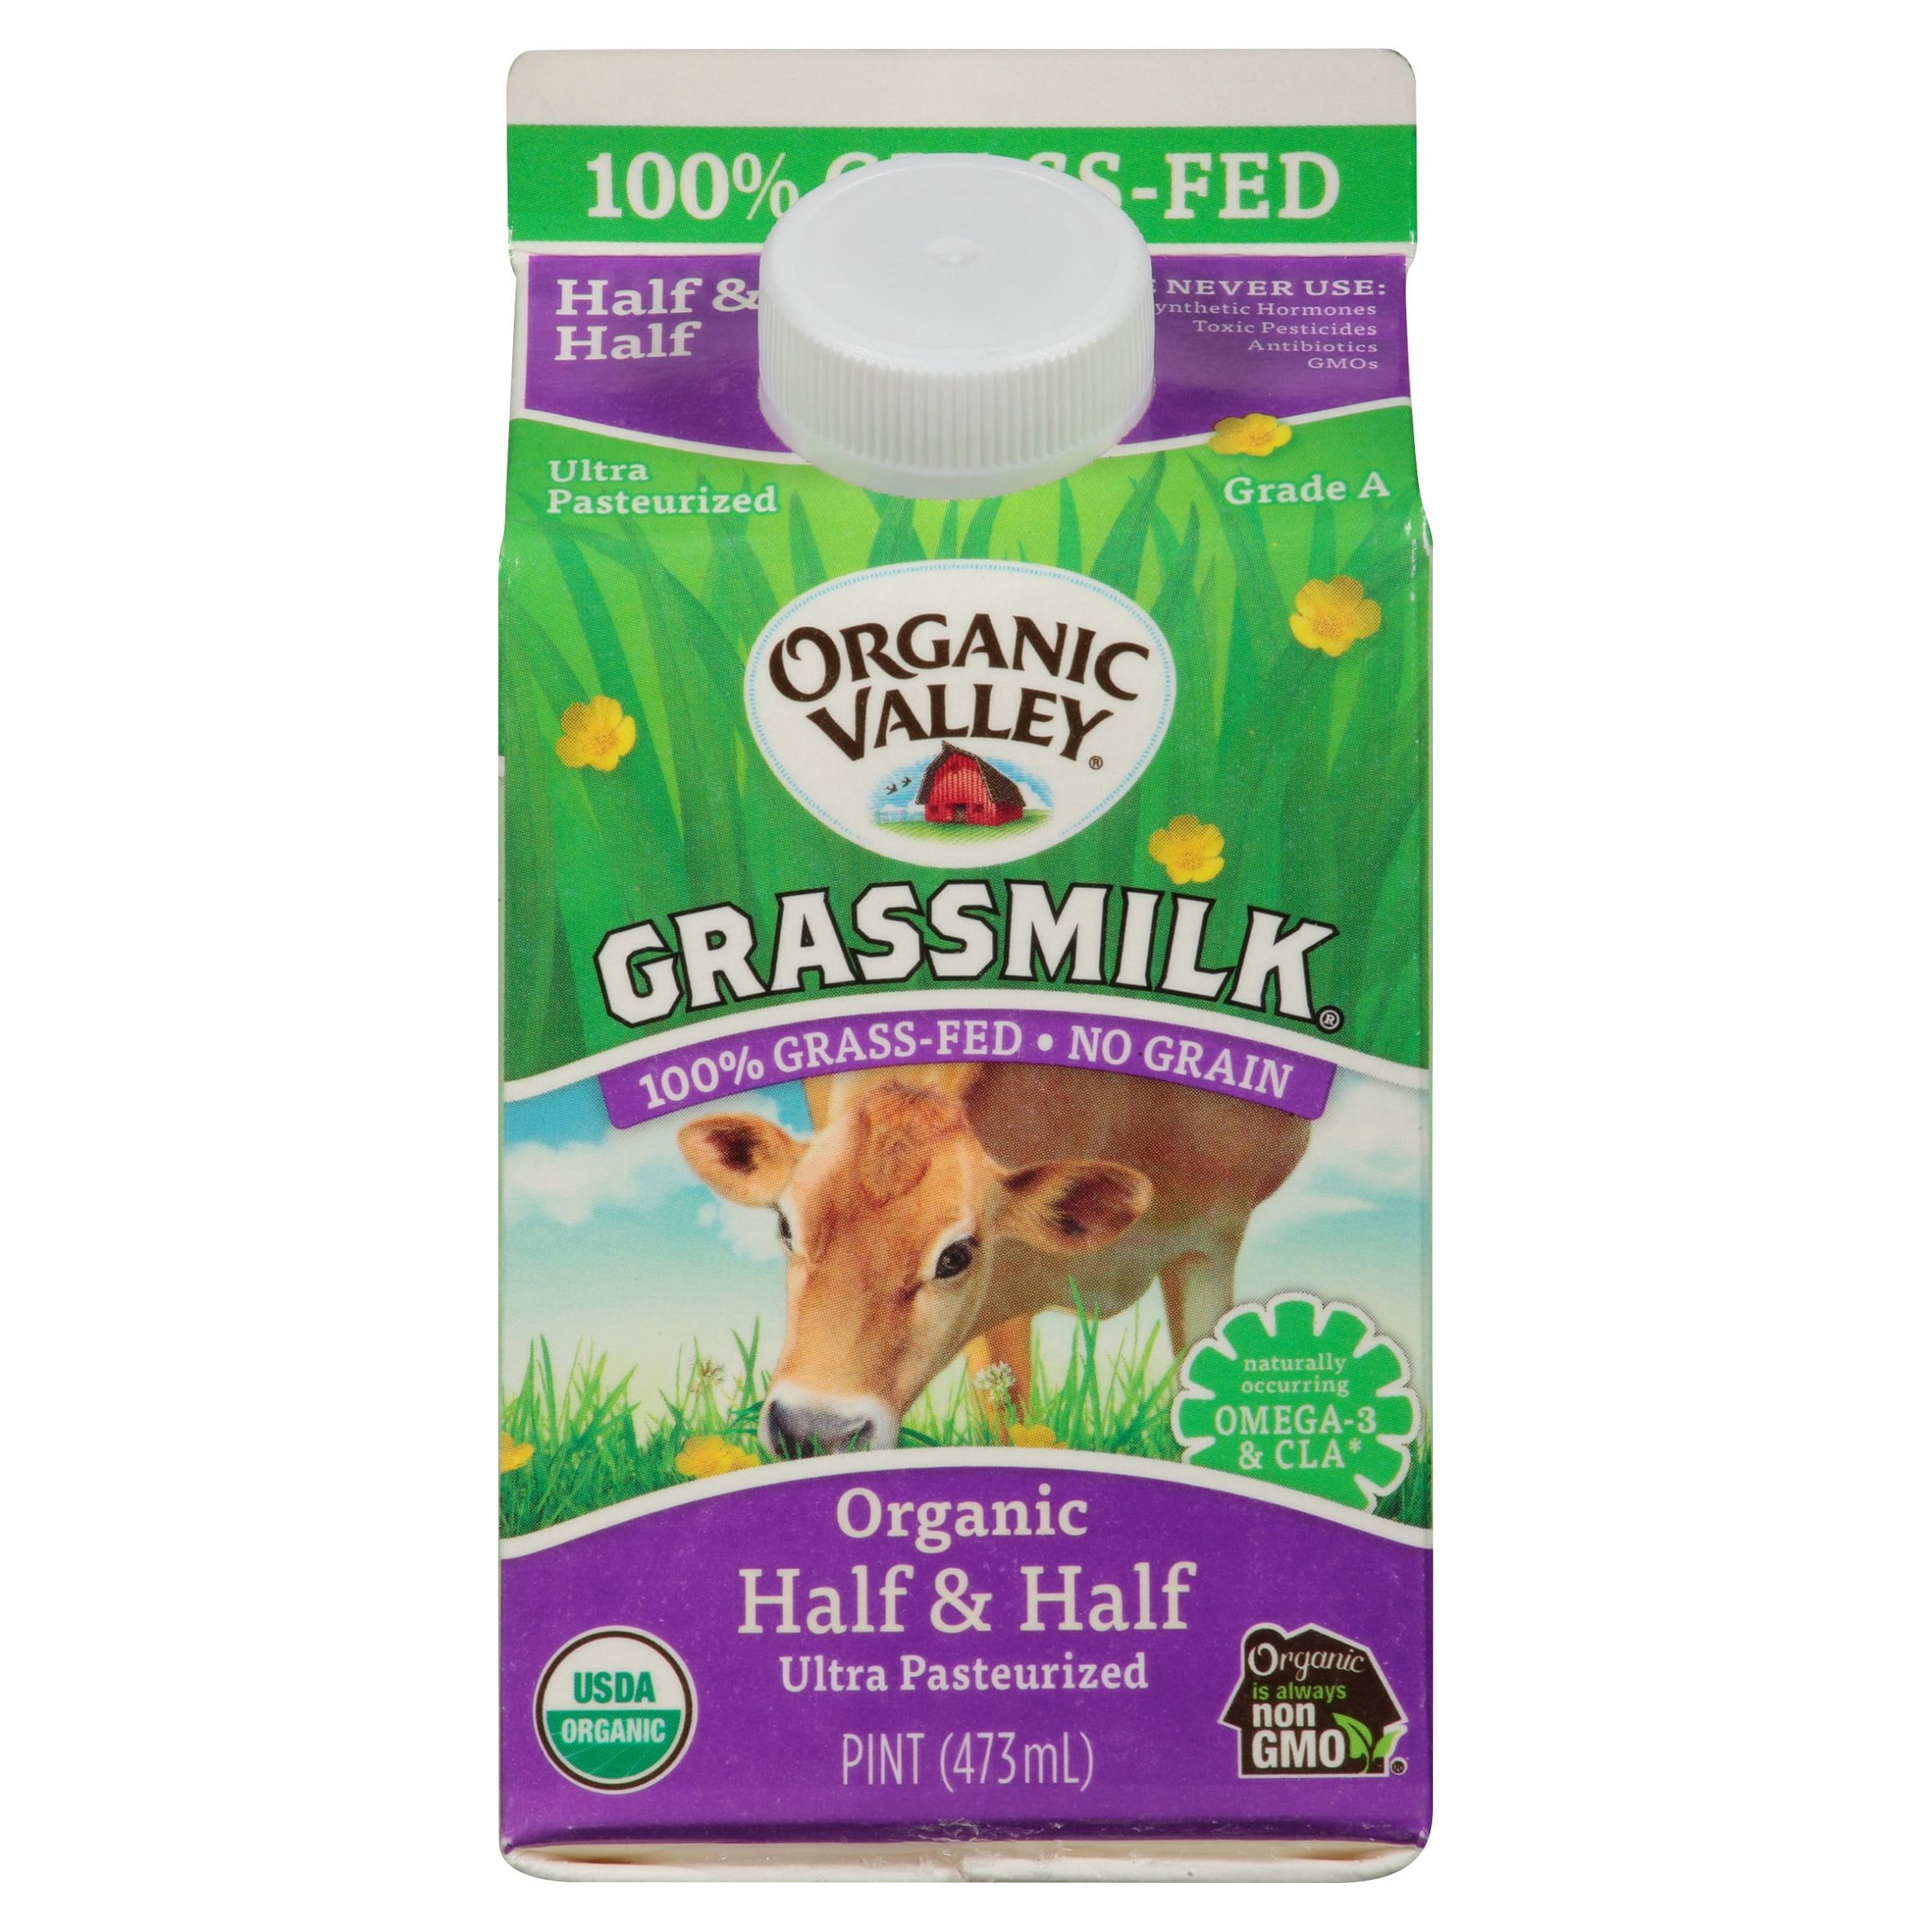 Organic Valley Grassmilk Organic Half and Half, 16 oz